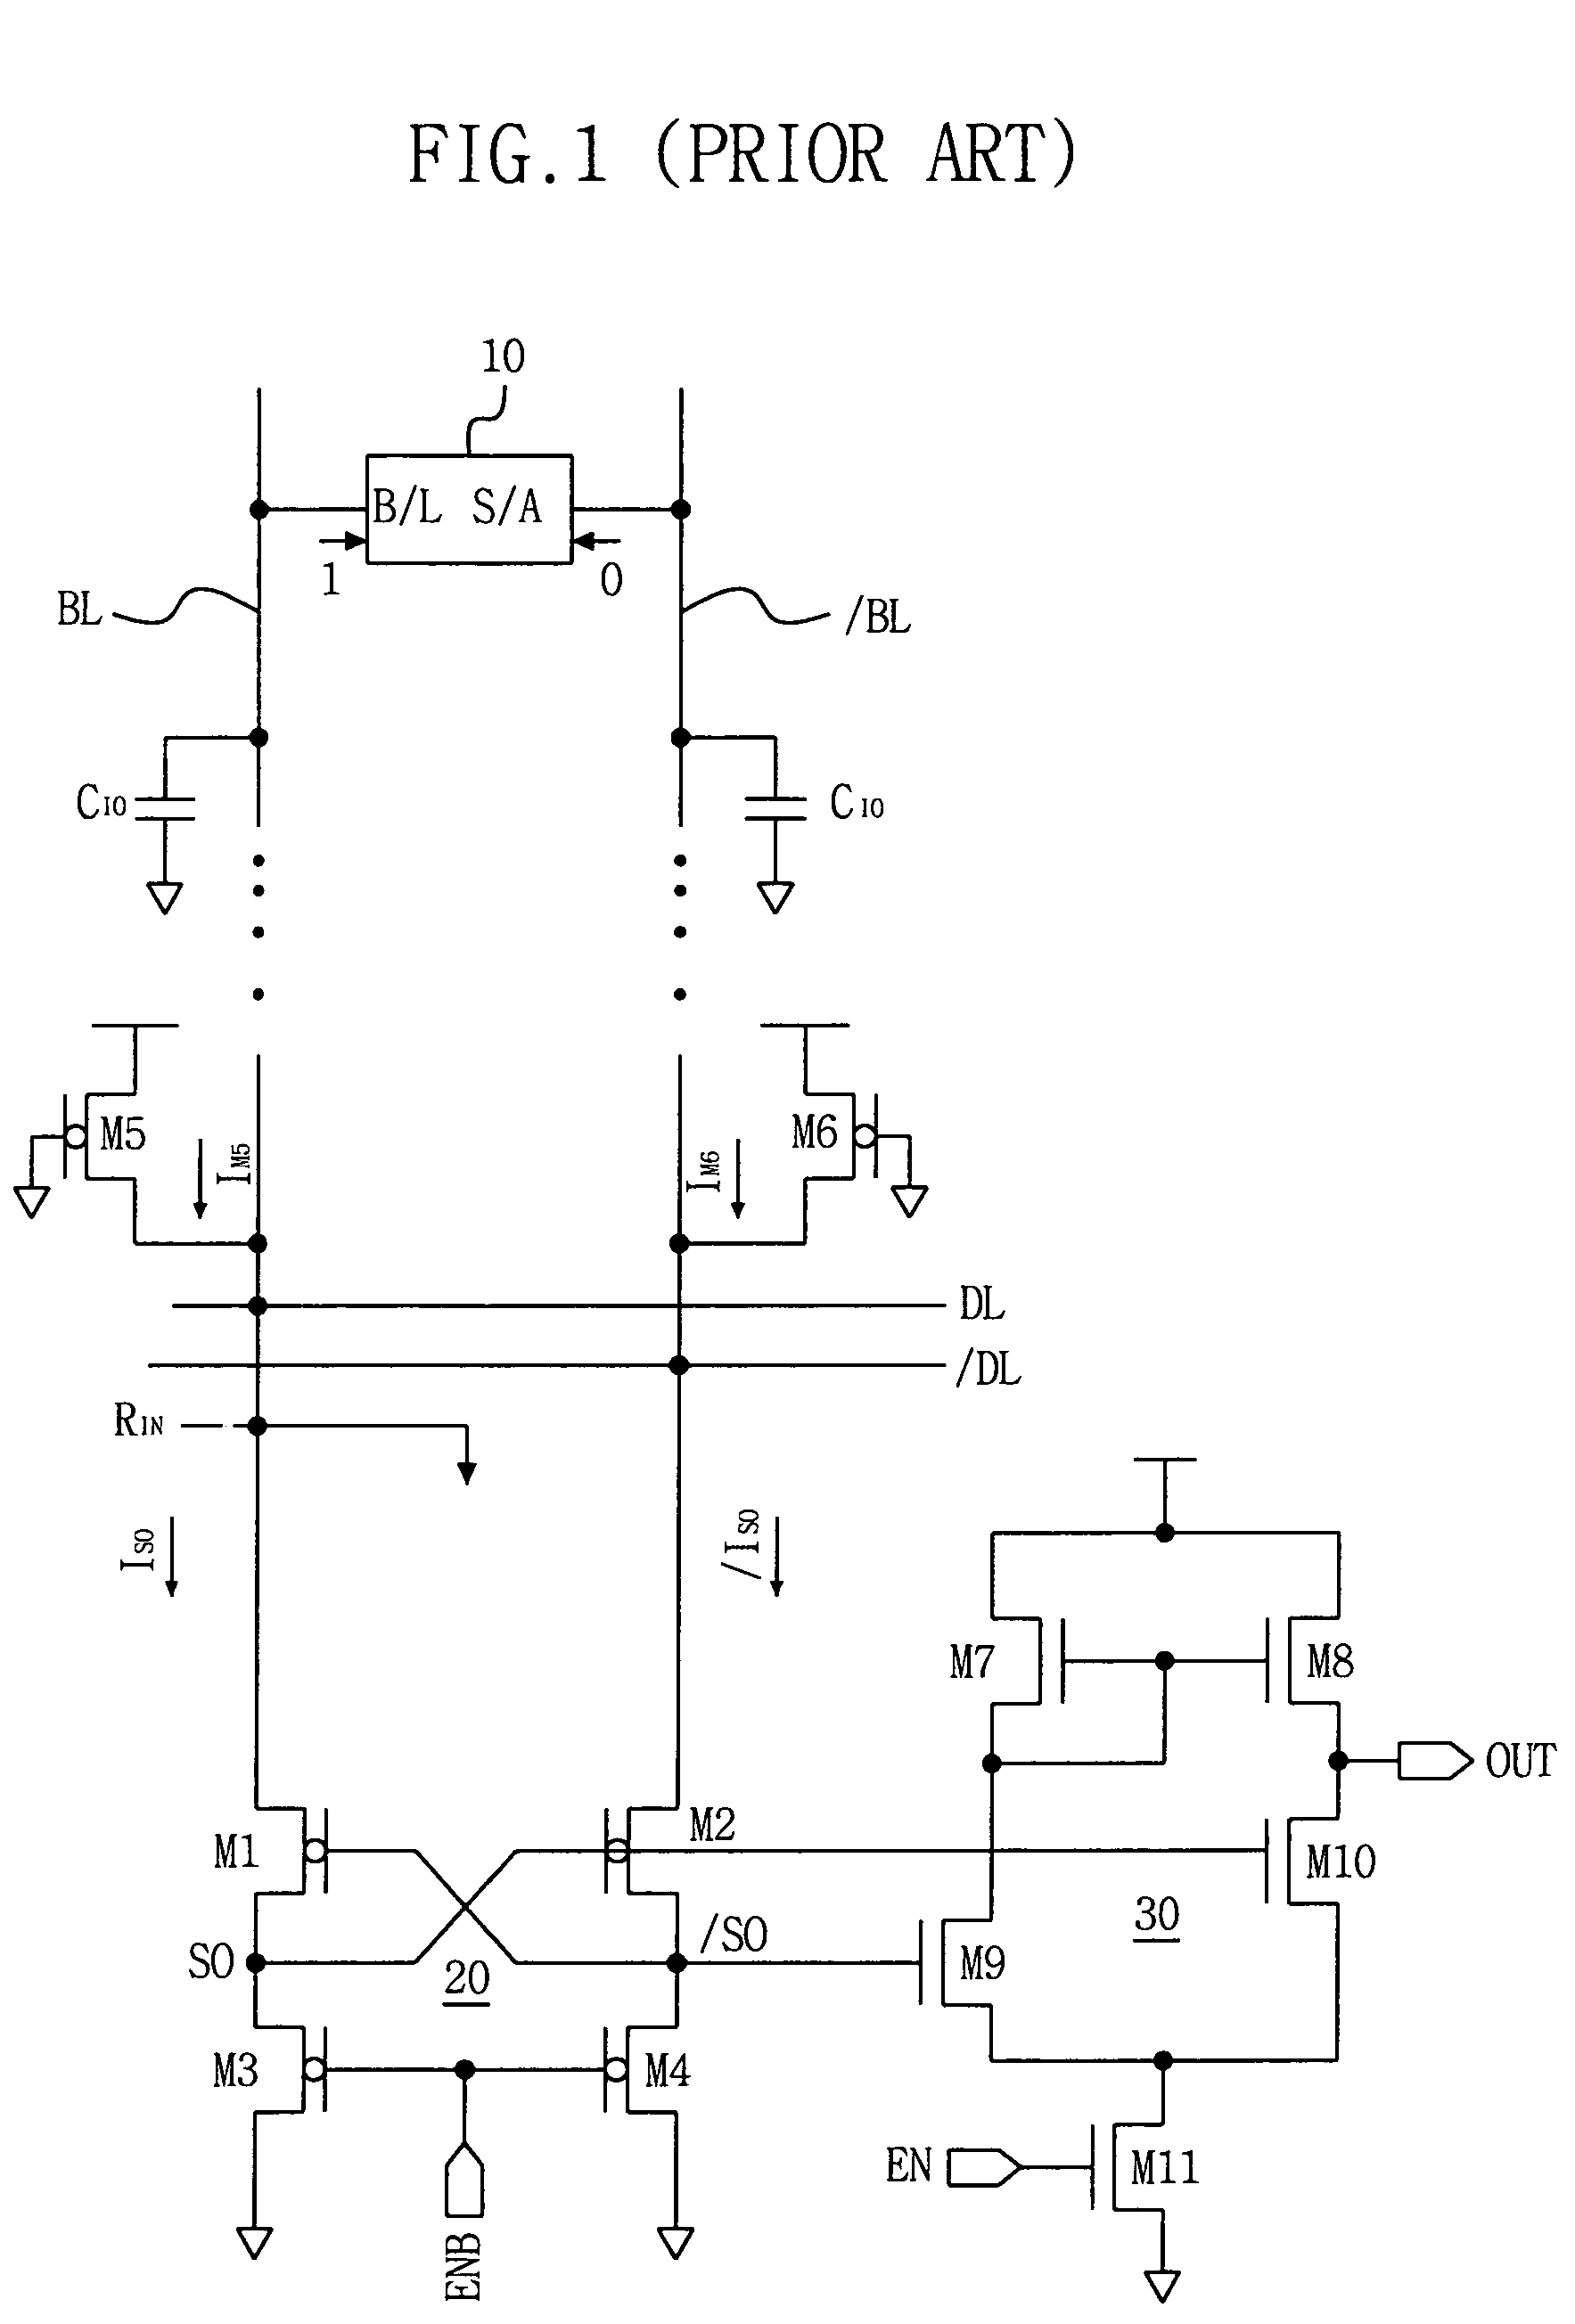 Current sense amplifier circuits having a bias voltage node for adjusting input resistance